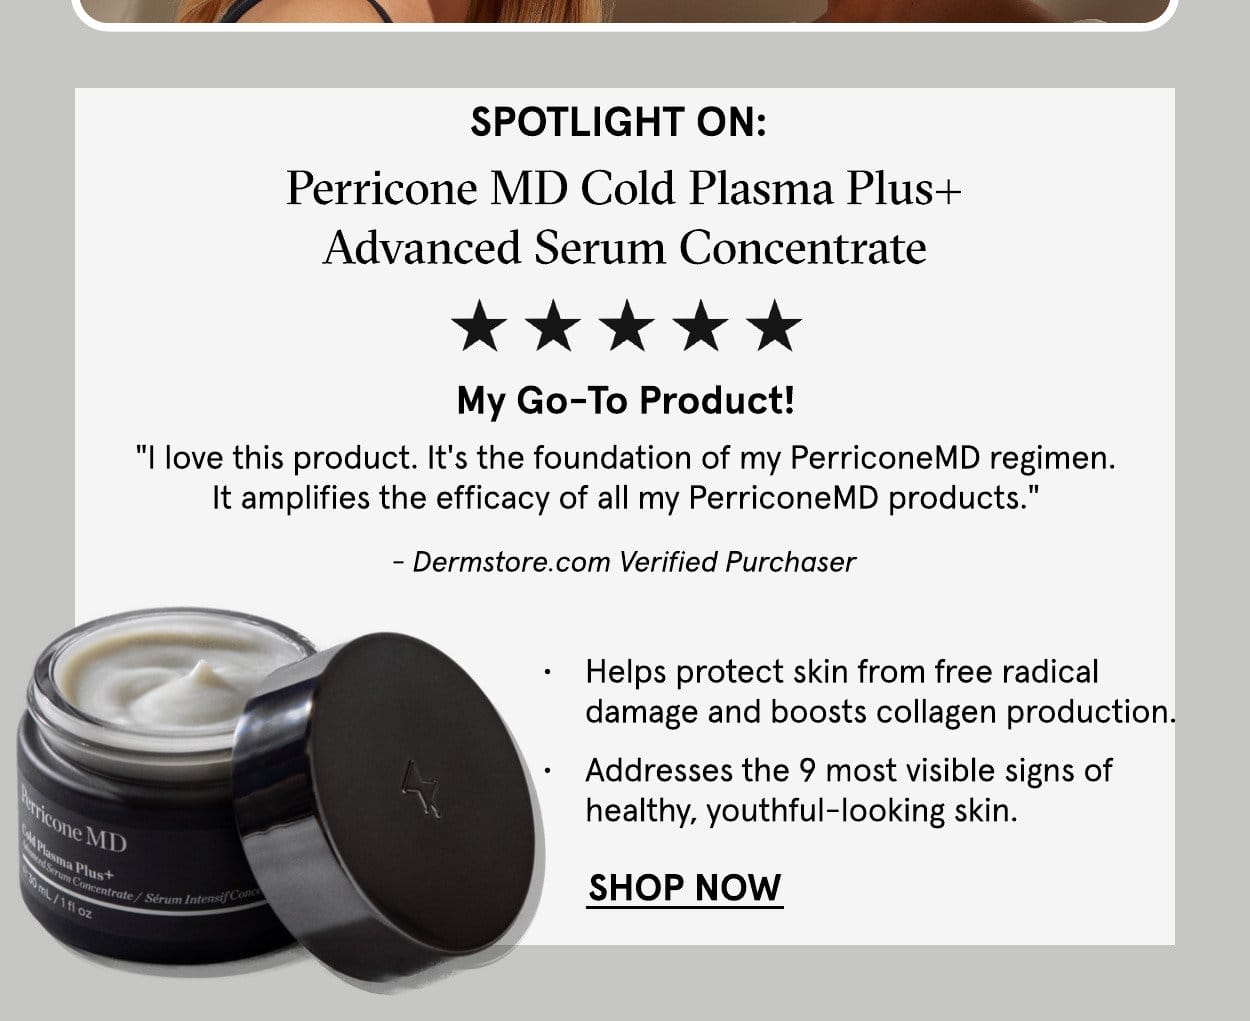 Perricone MD Cold Plasma Plus+